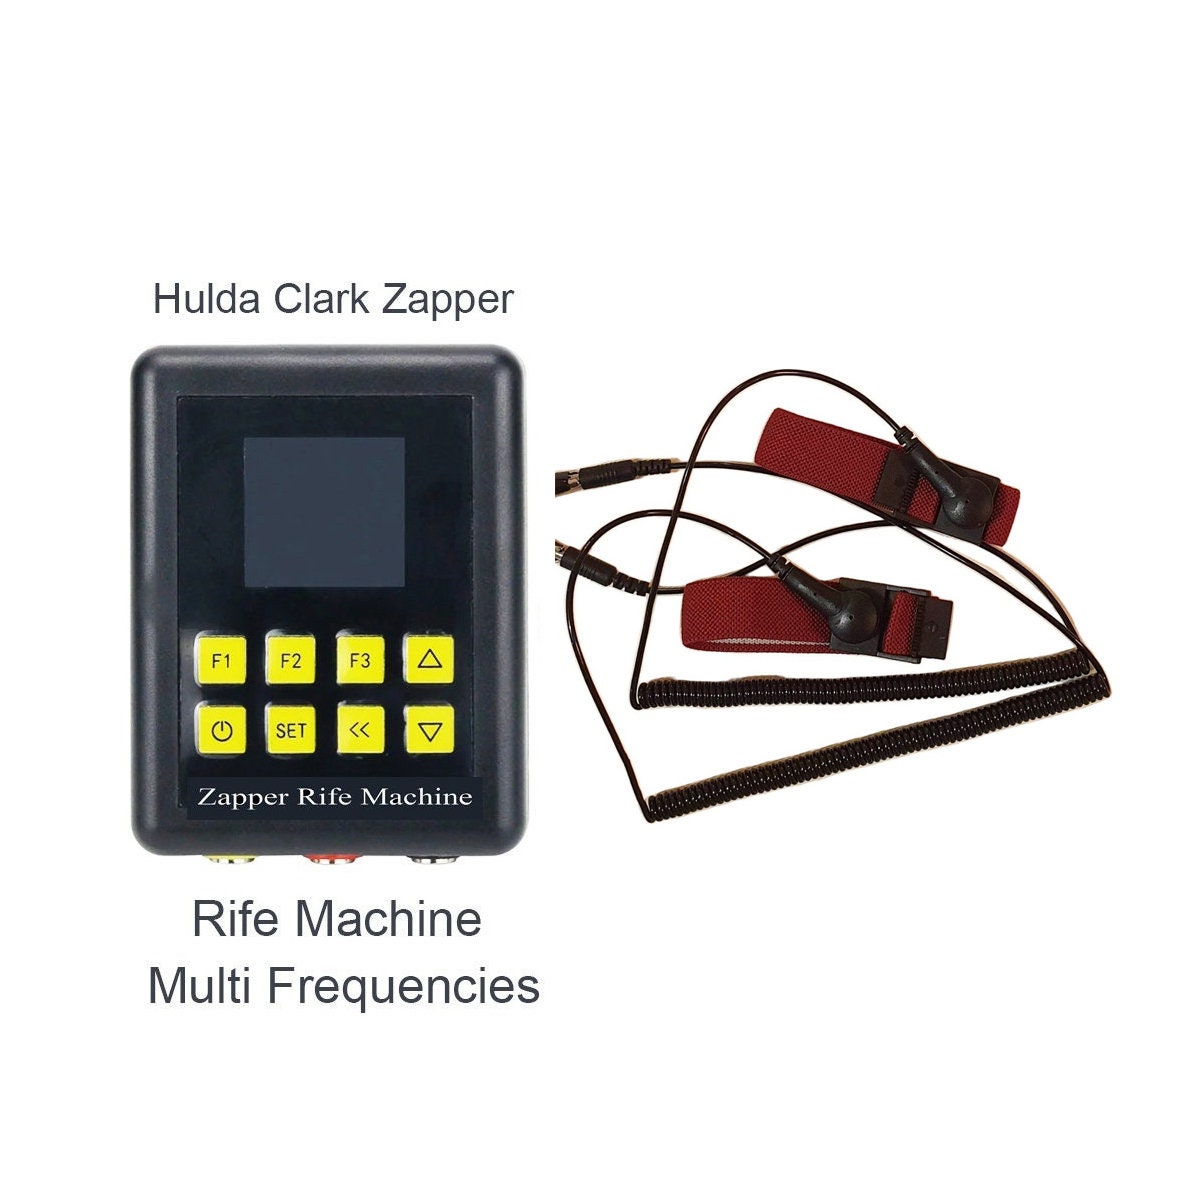 RIFE MACHINE With Hulda Clark Zapper Multi Frequencies and Copper